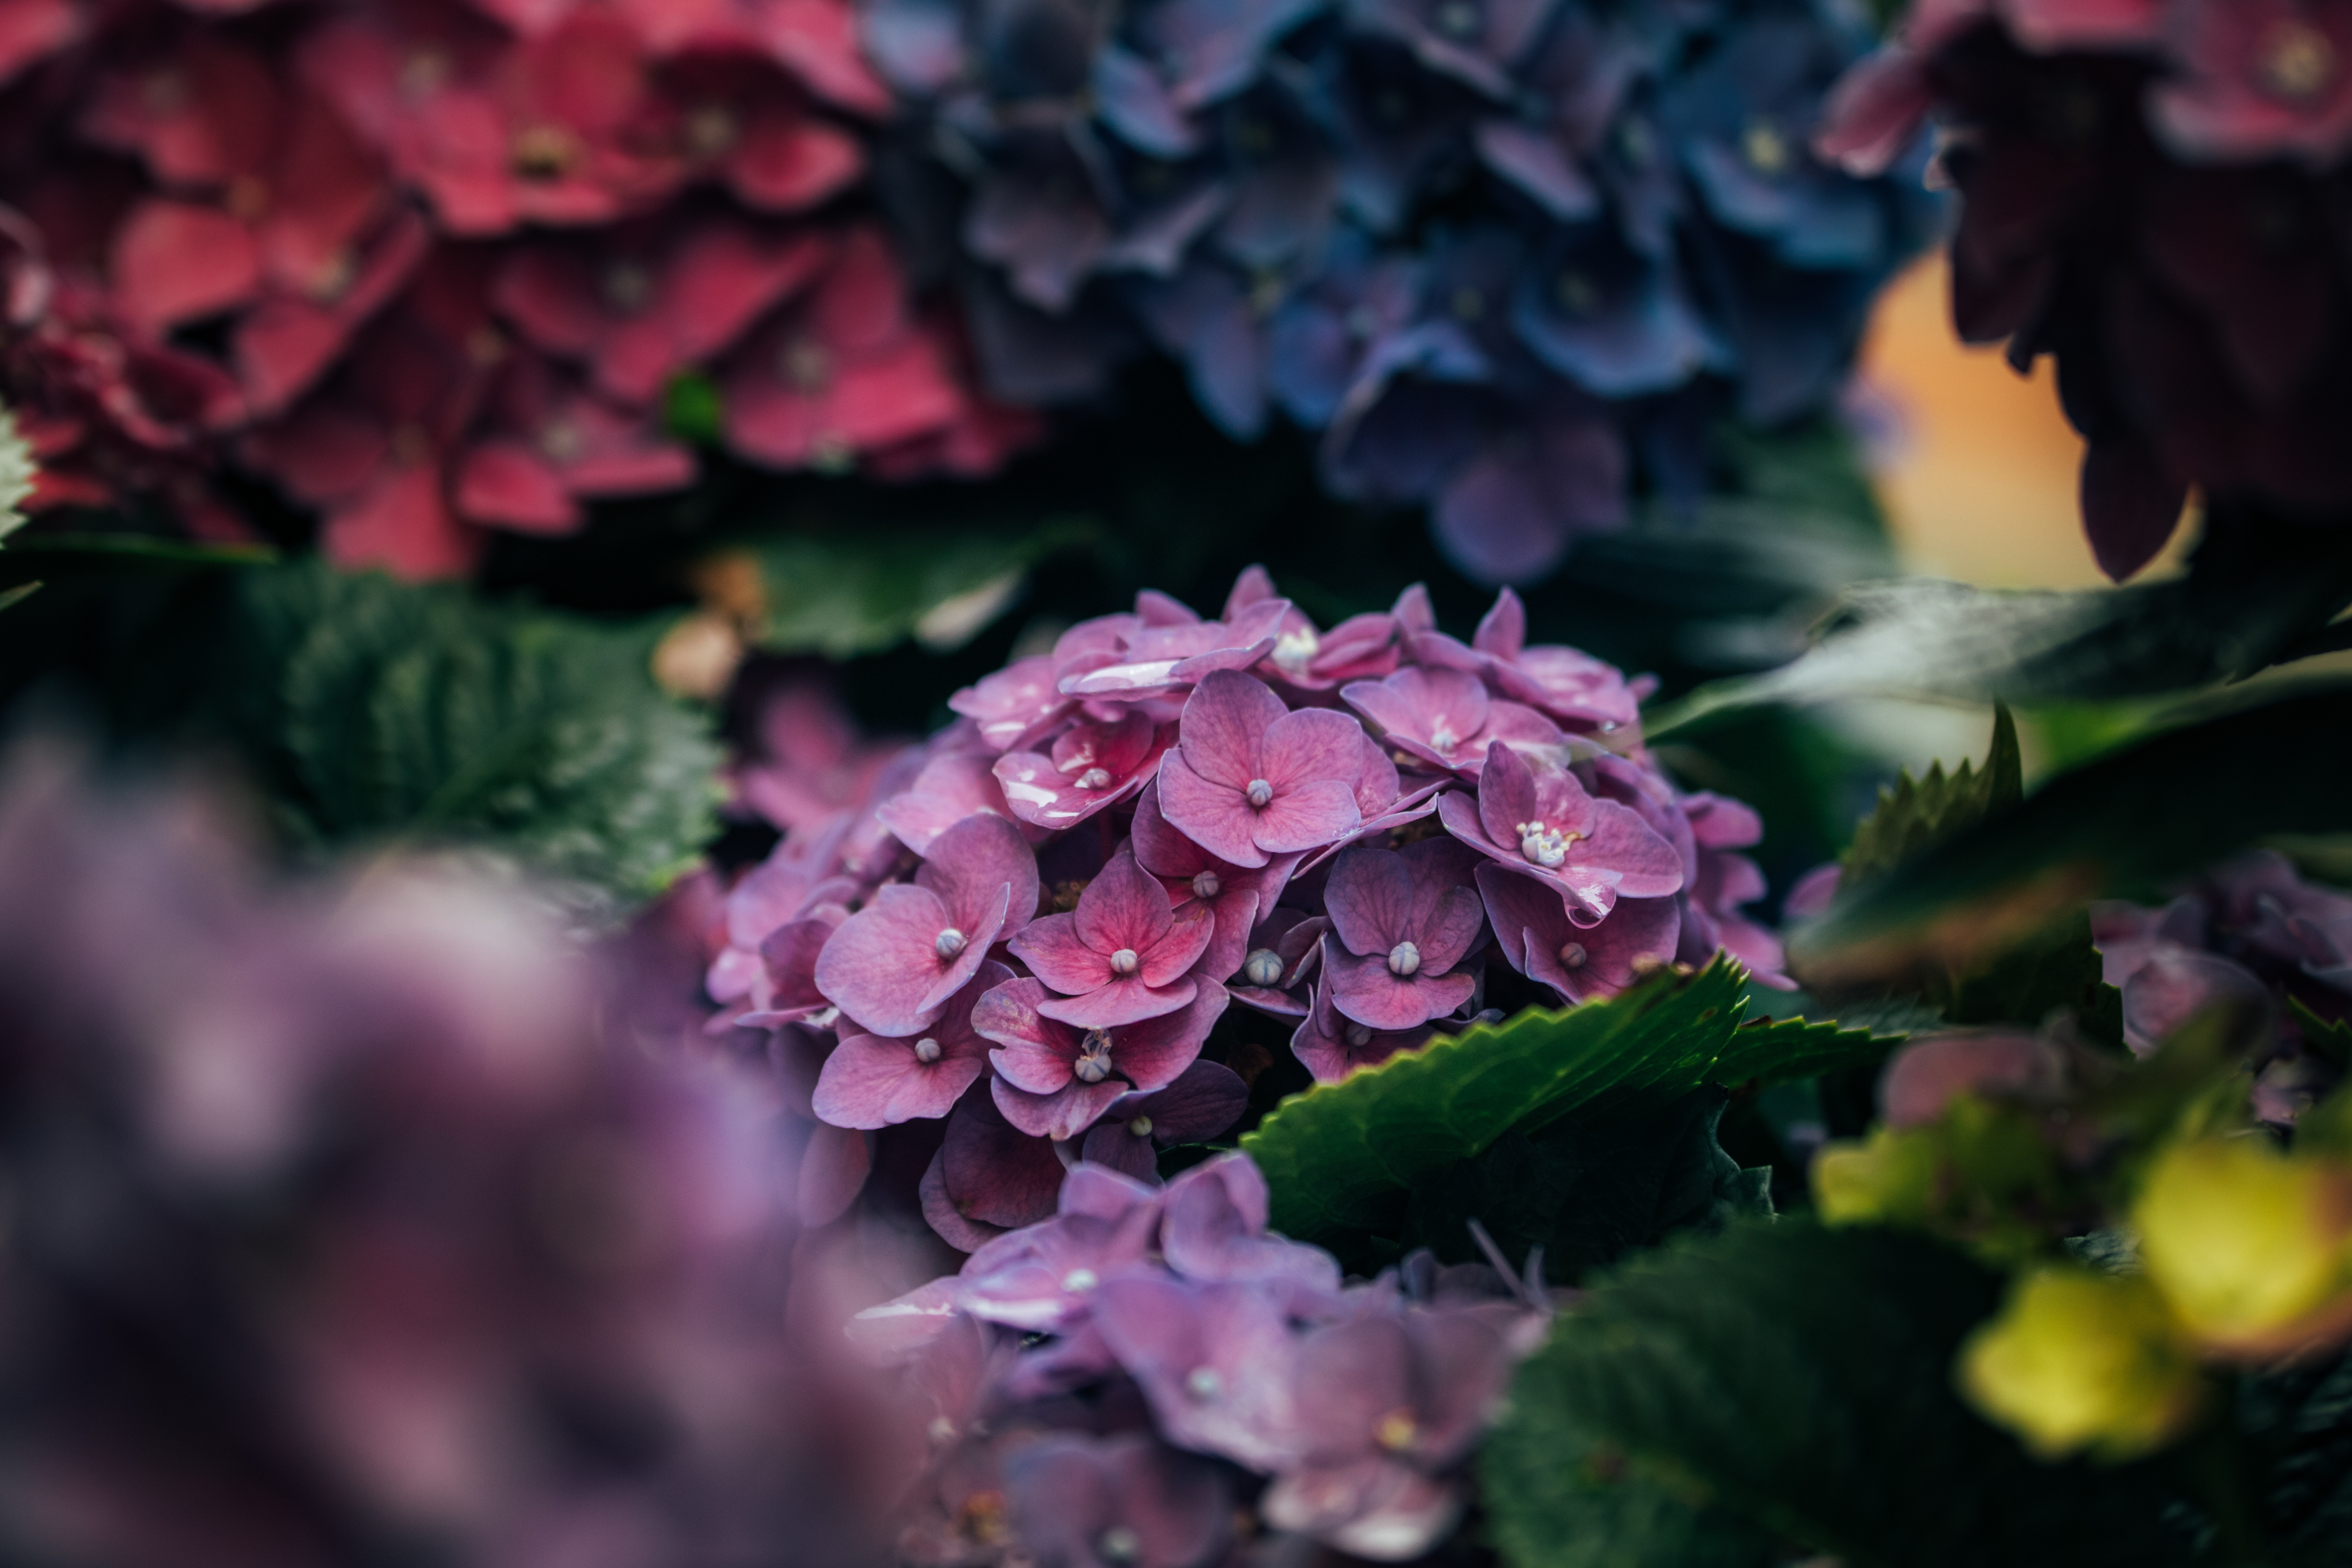 hydrangea, macro, petals, close up High Definition image